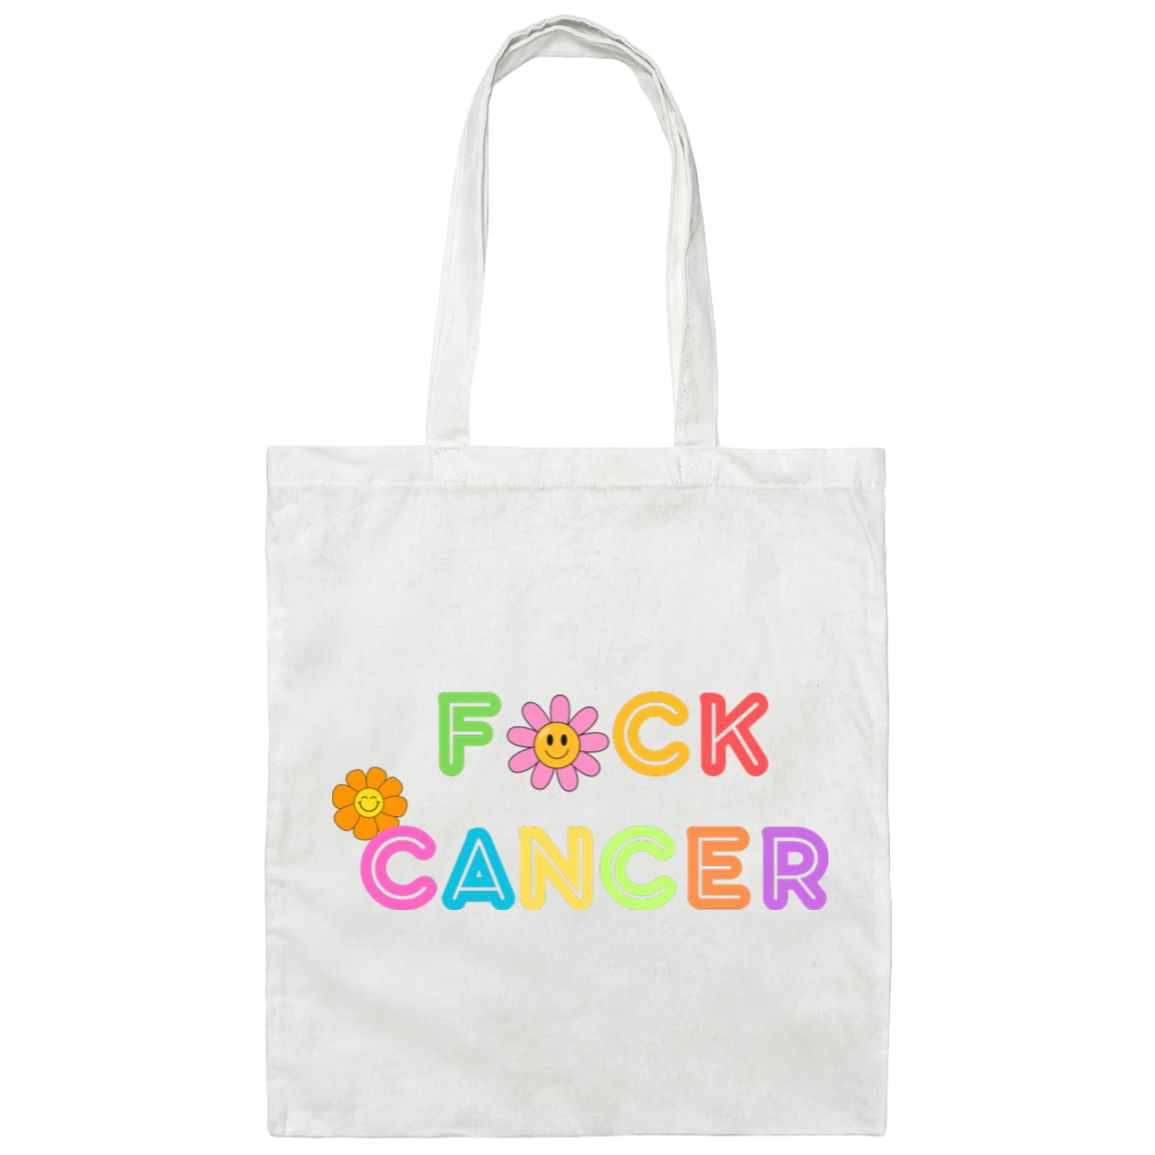 F*ck Cancer Canvas bag